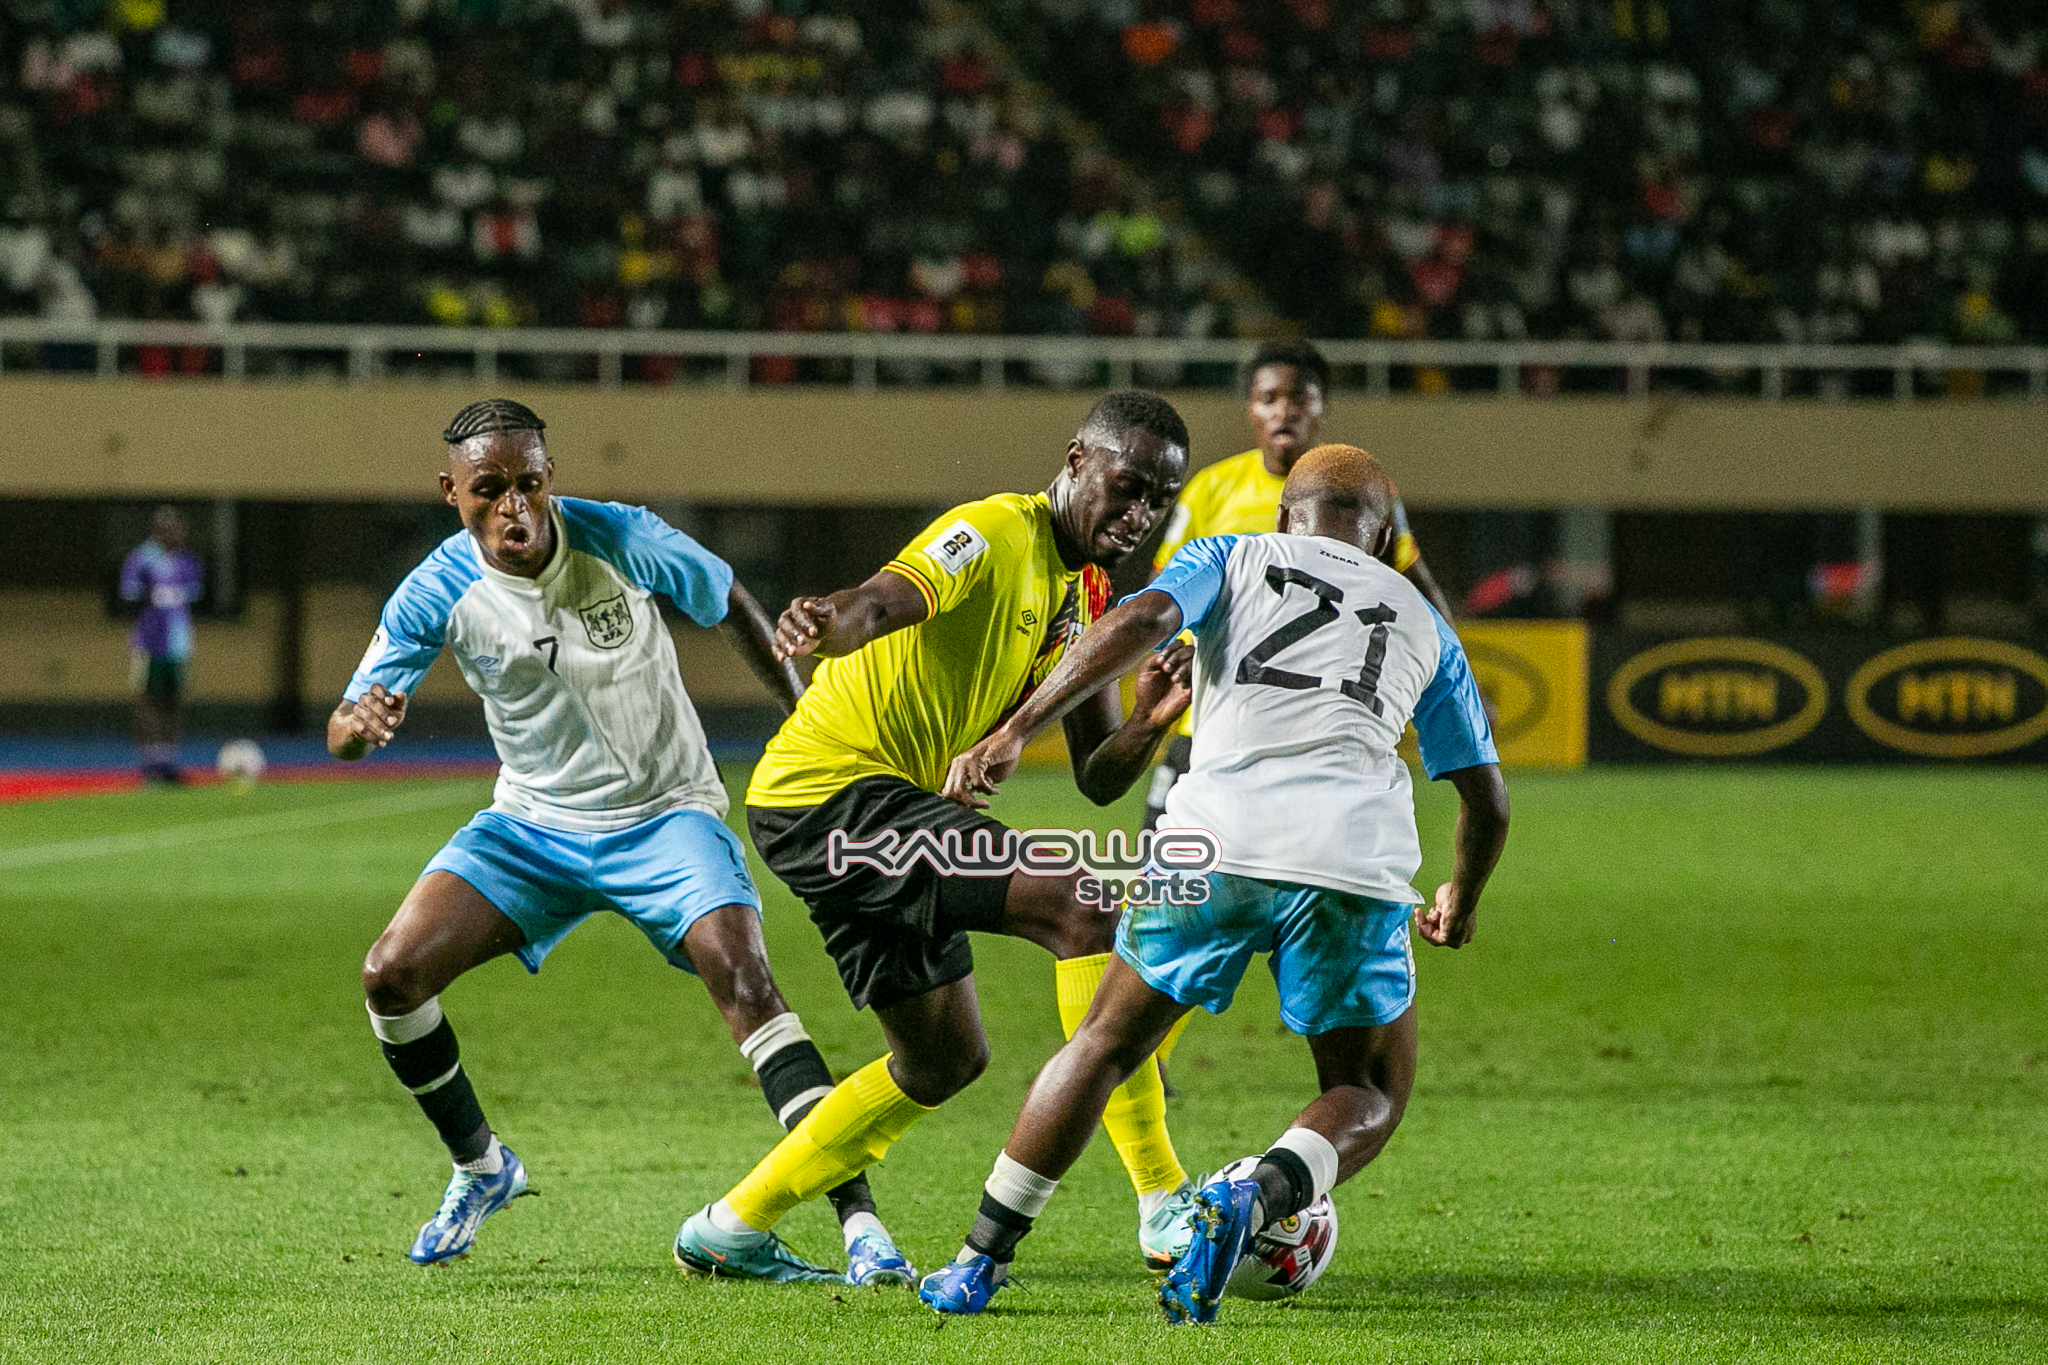 FIFA World Cup 2026 Qualifiers: Uganda Cranes, Botswana Zebras remain goal-less at half way mark